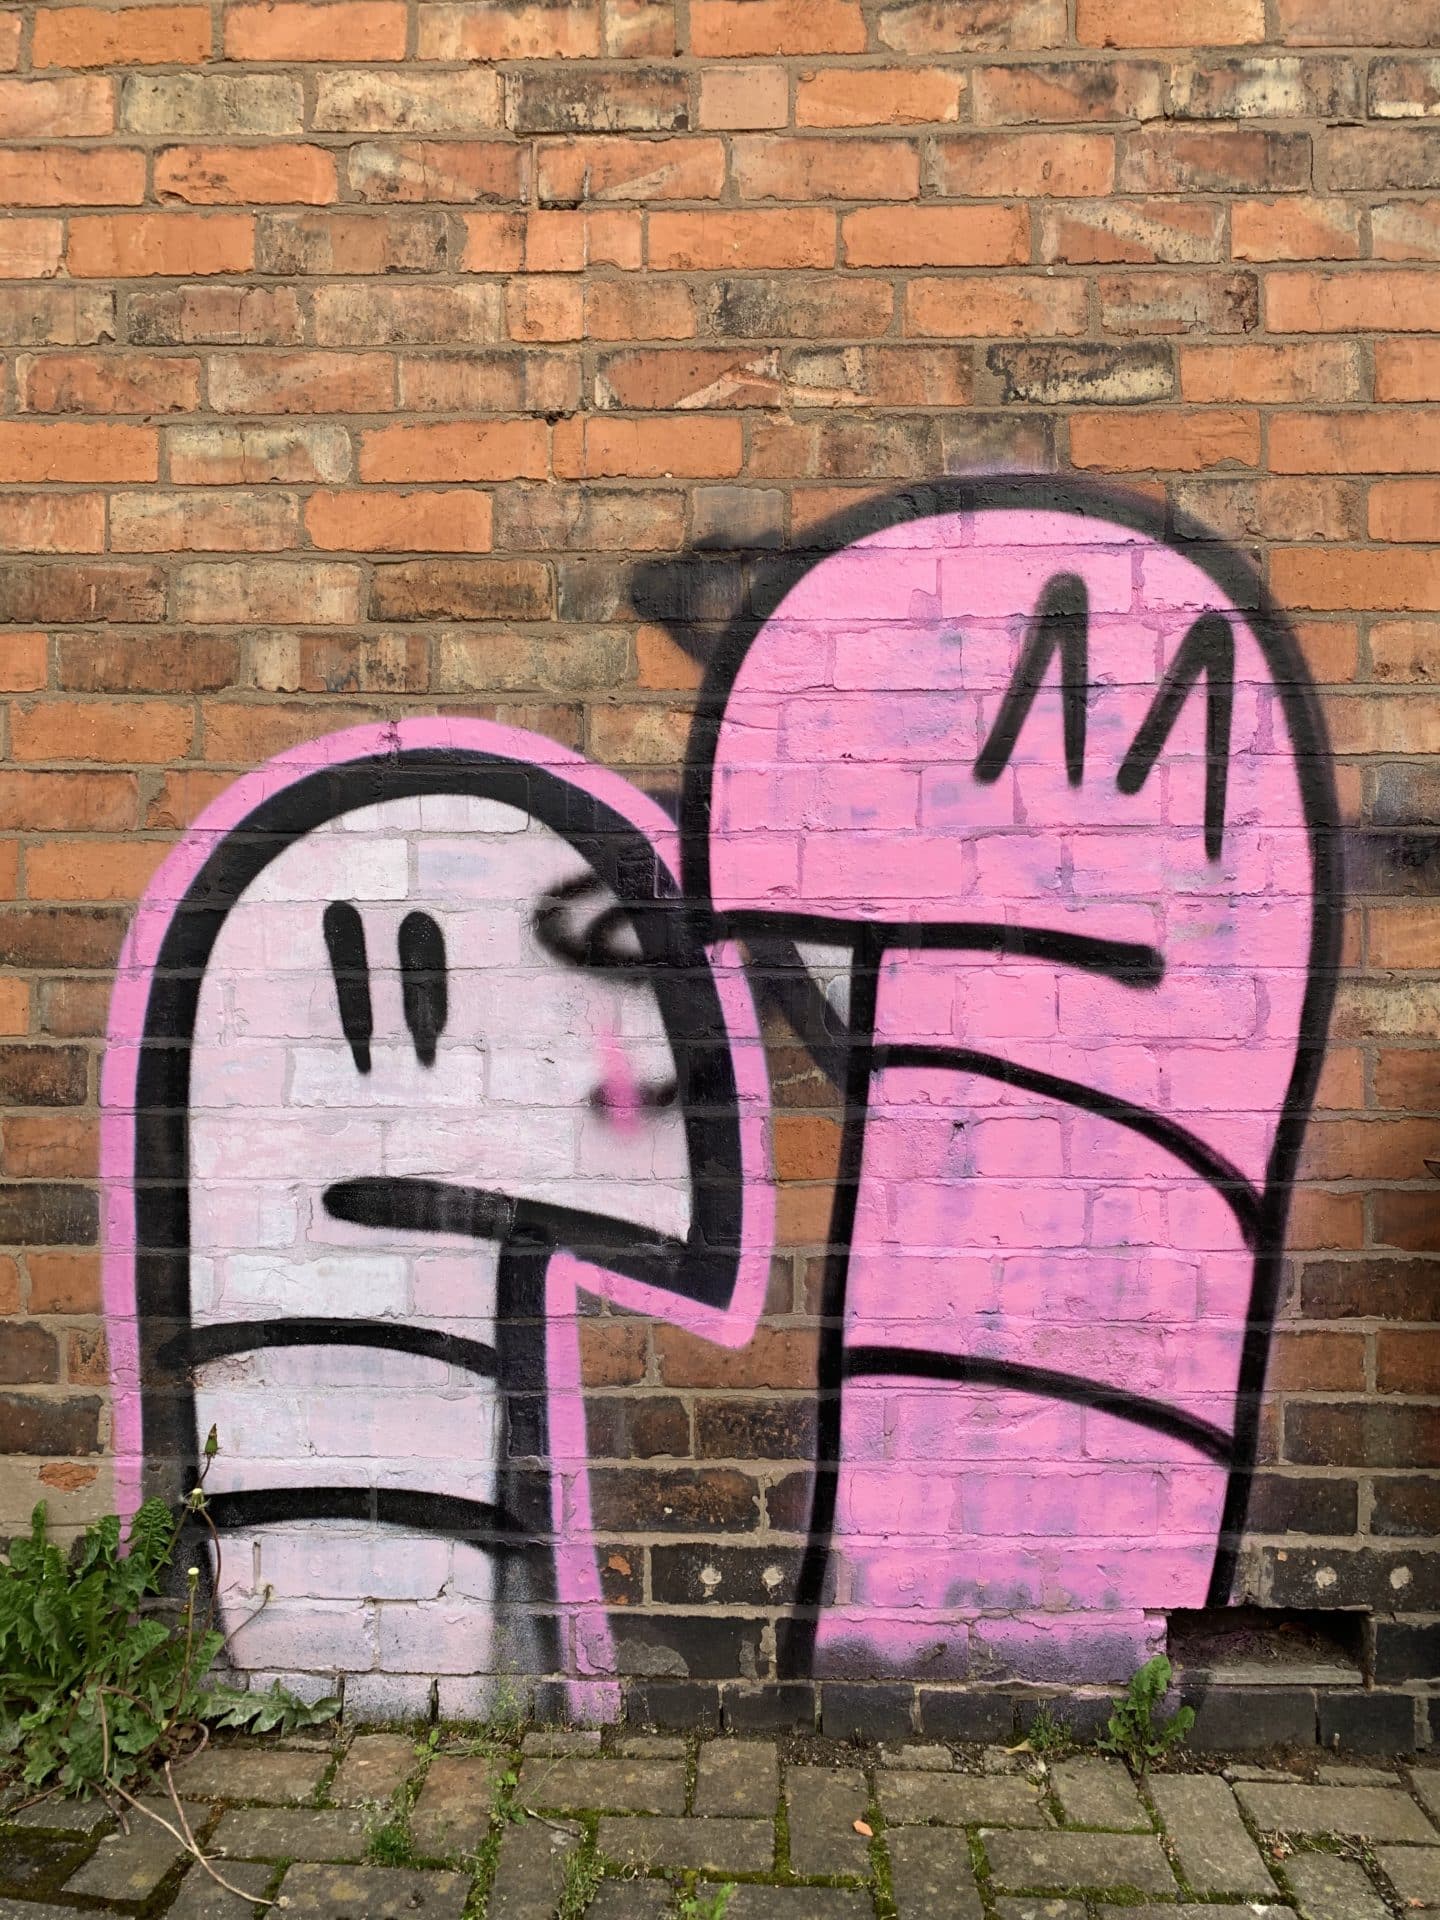 The urban street art scene transforming Leicester